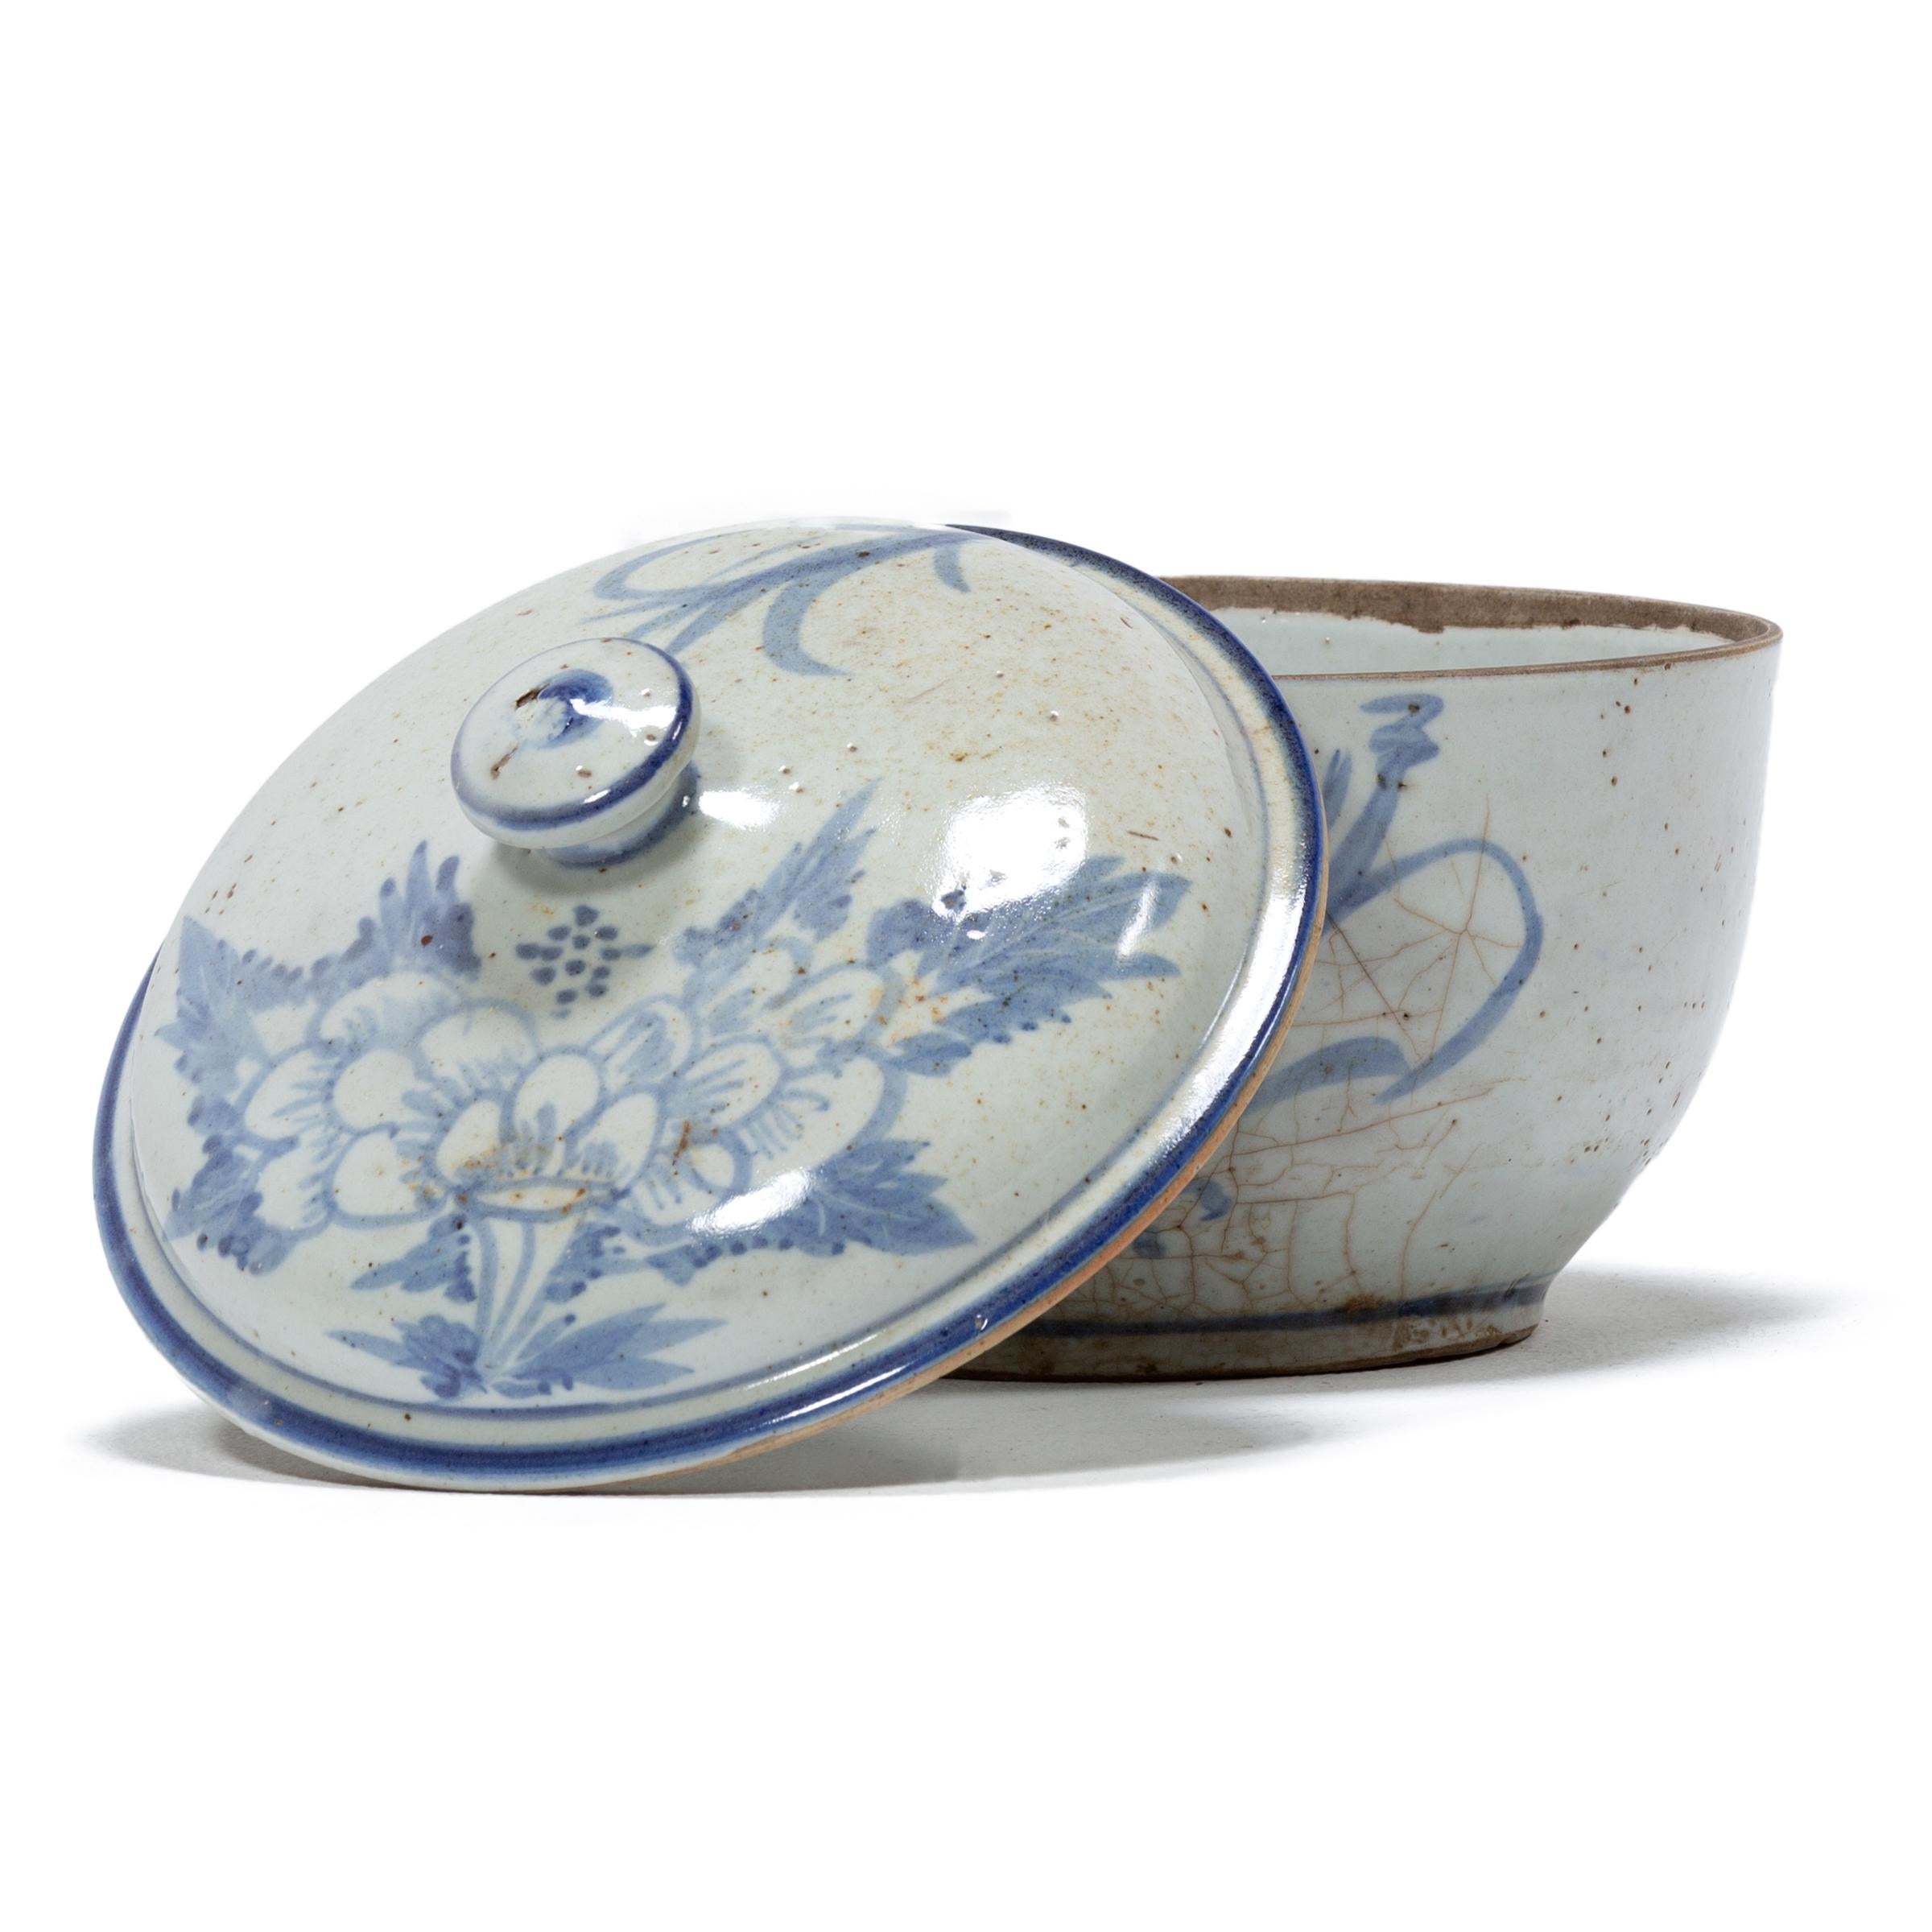 20th Century Chinese Blue and White Peony Congee Pot, circa 1900